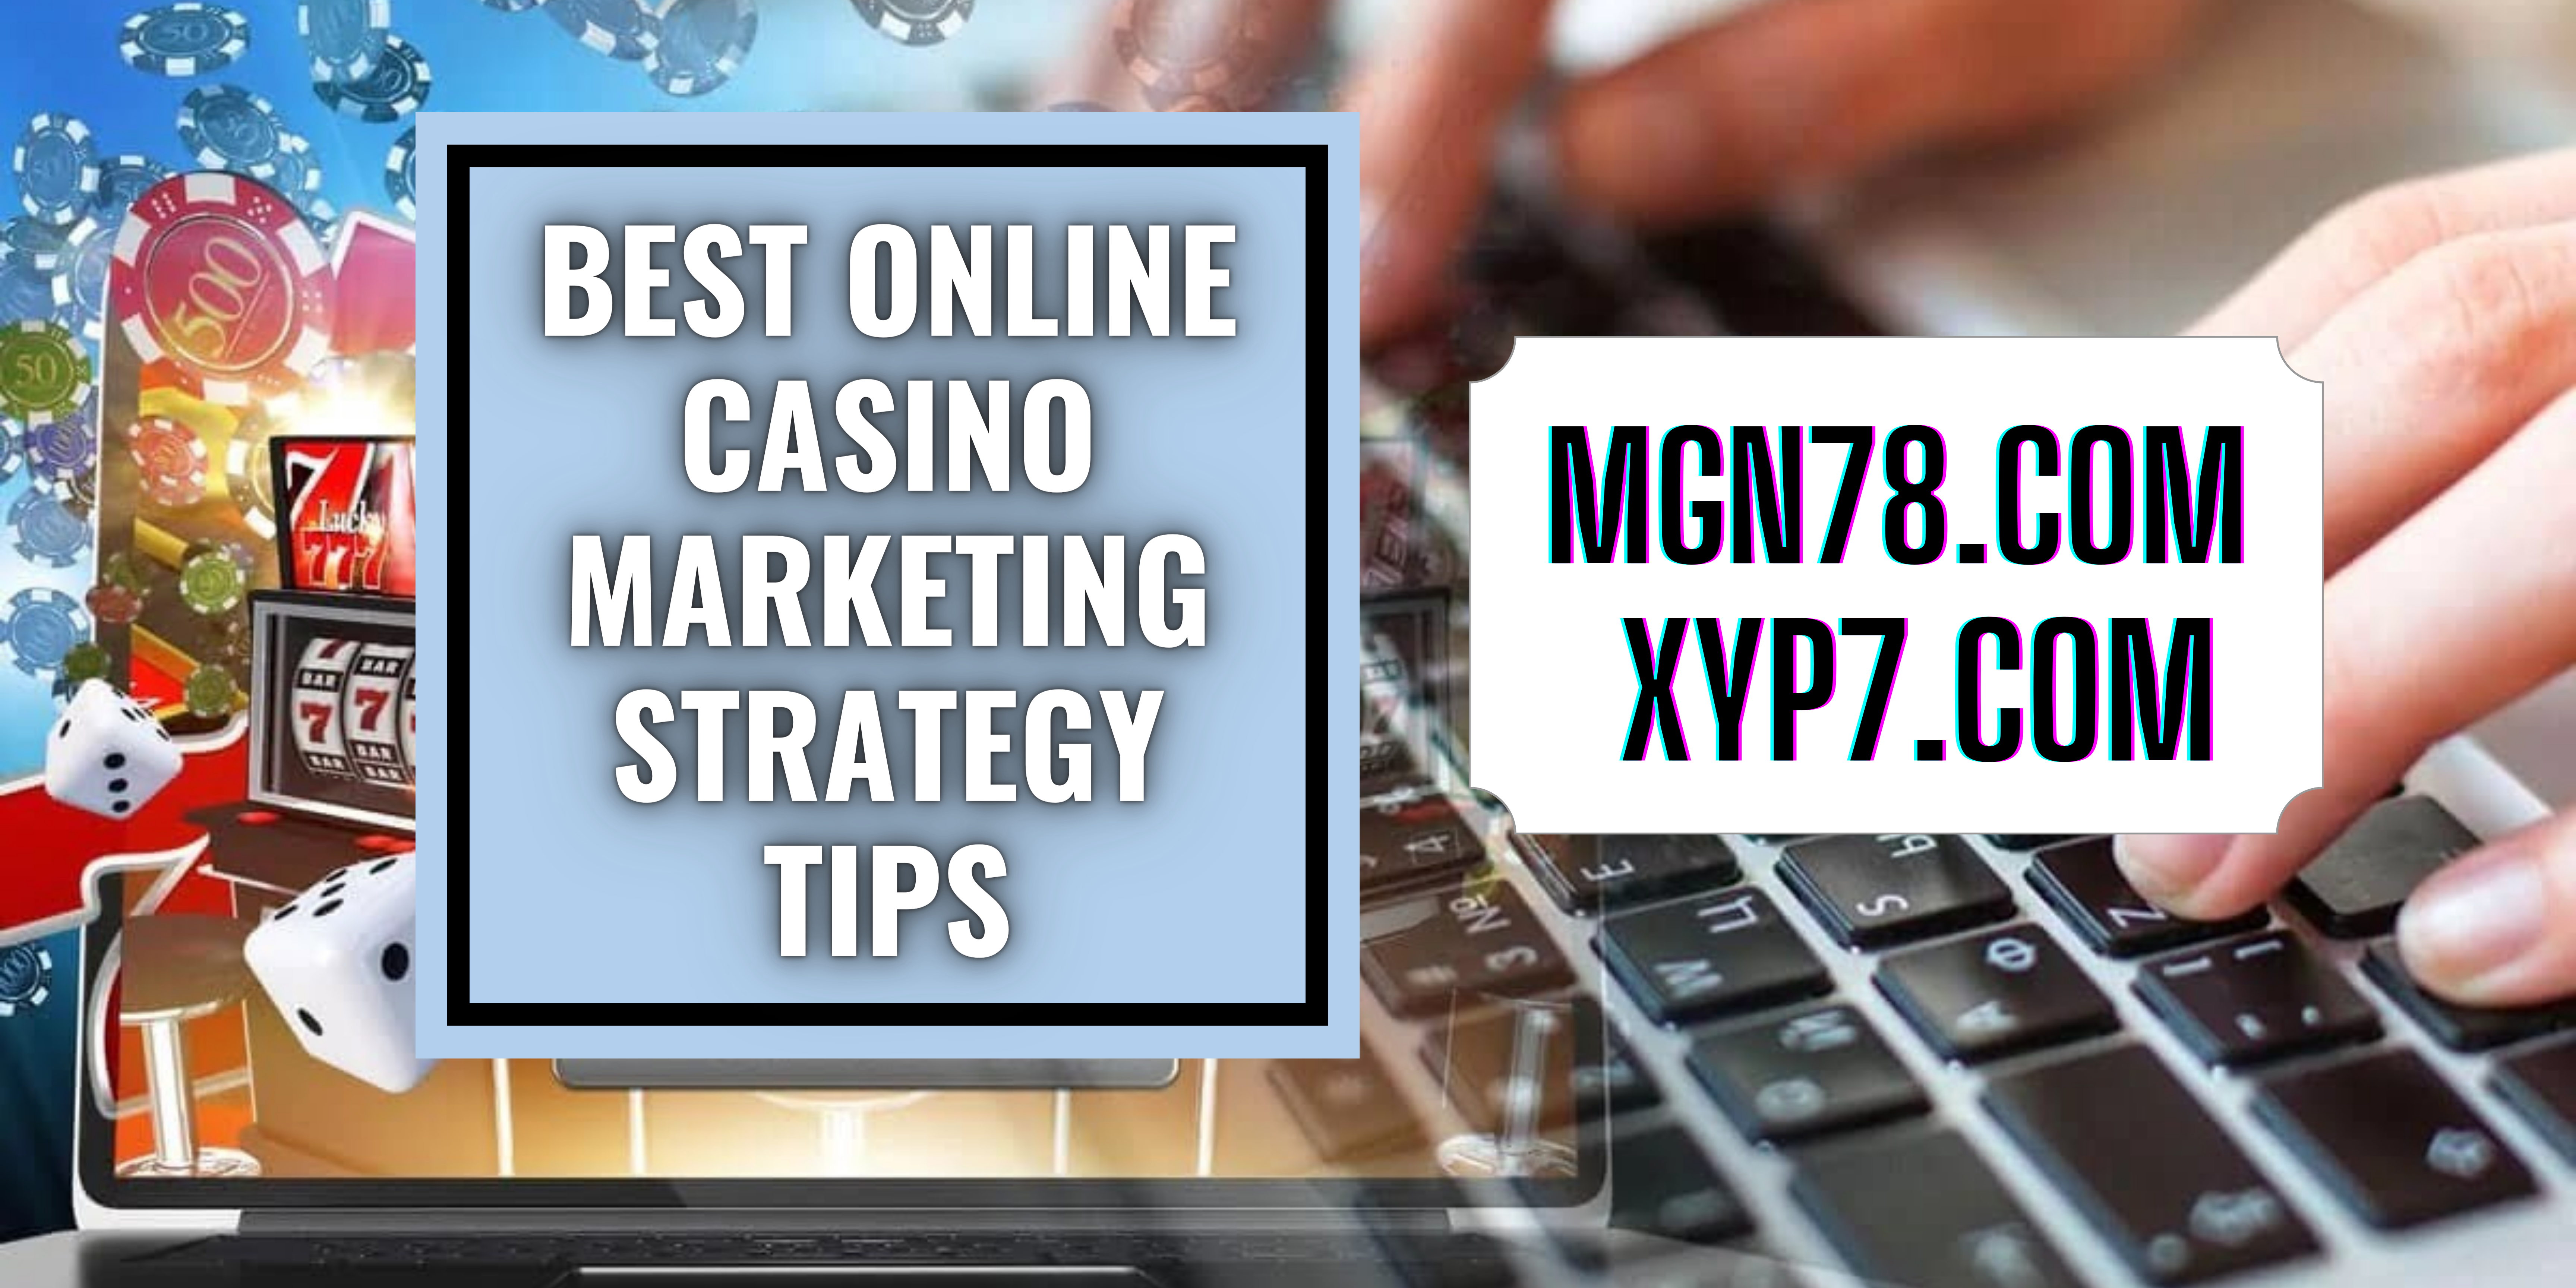 Marketing Strategy Tips of Best Online Casino